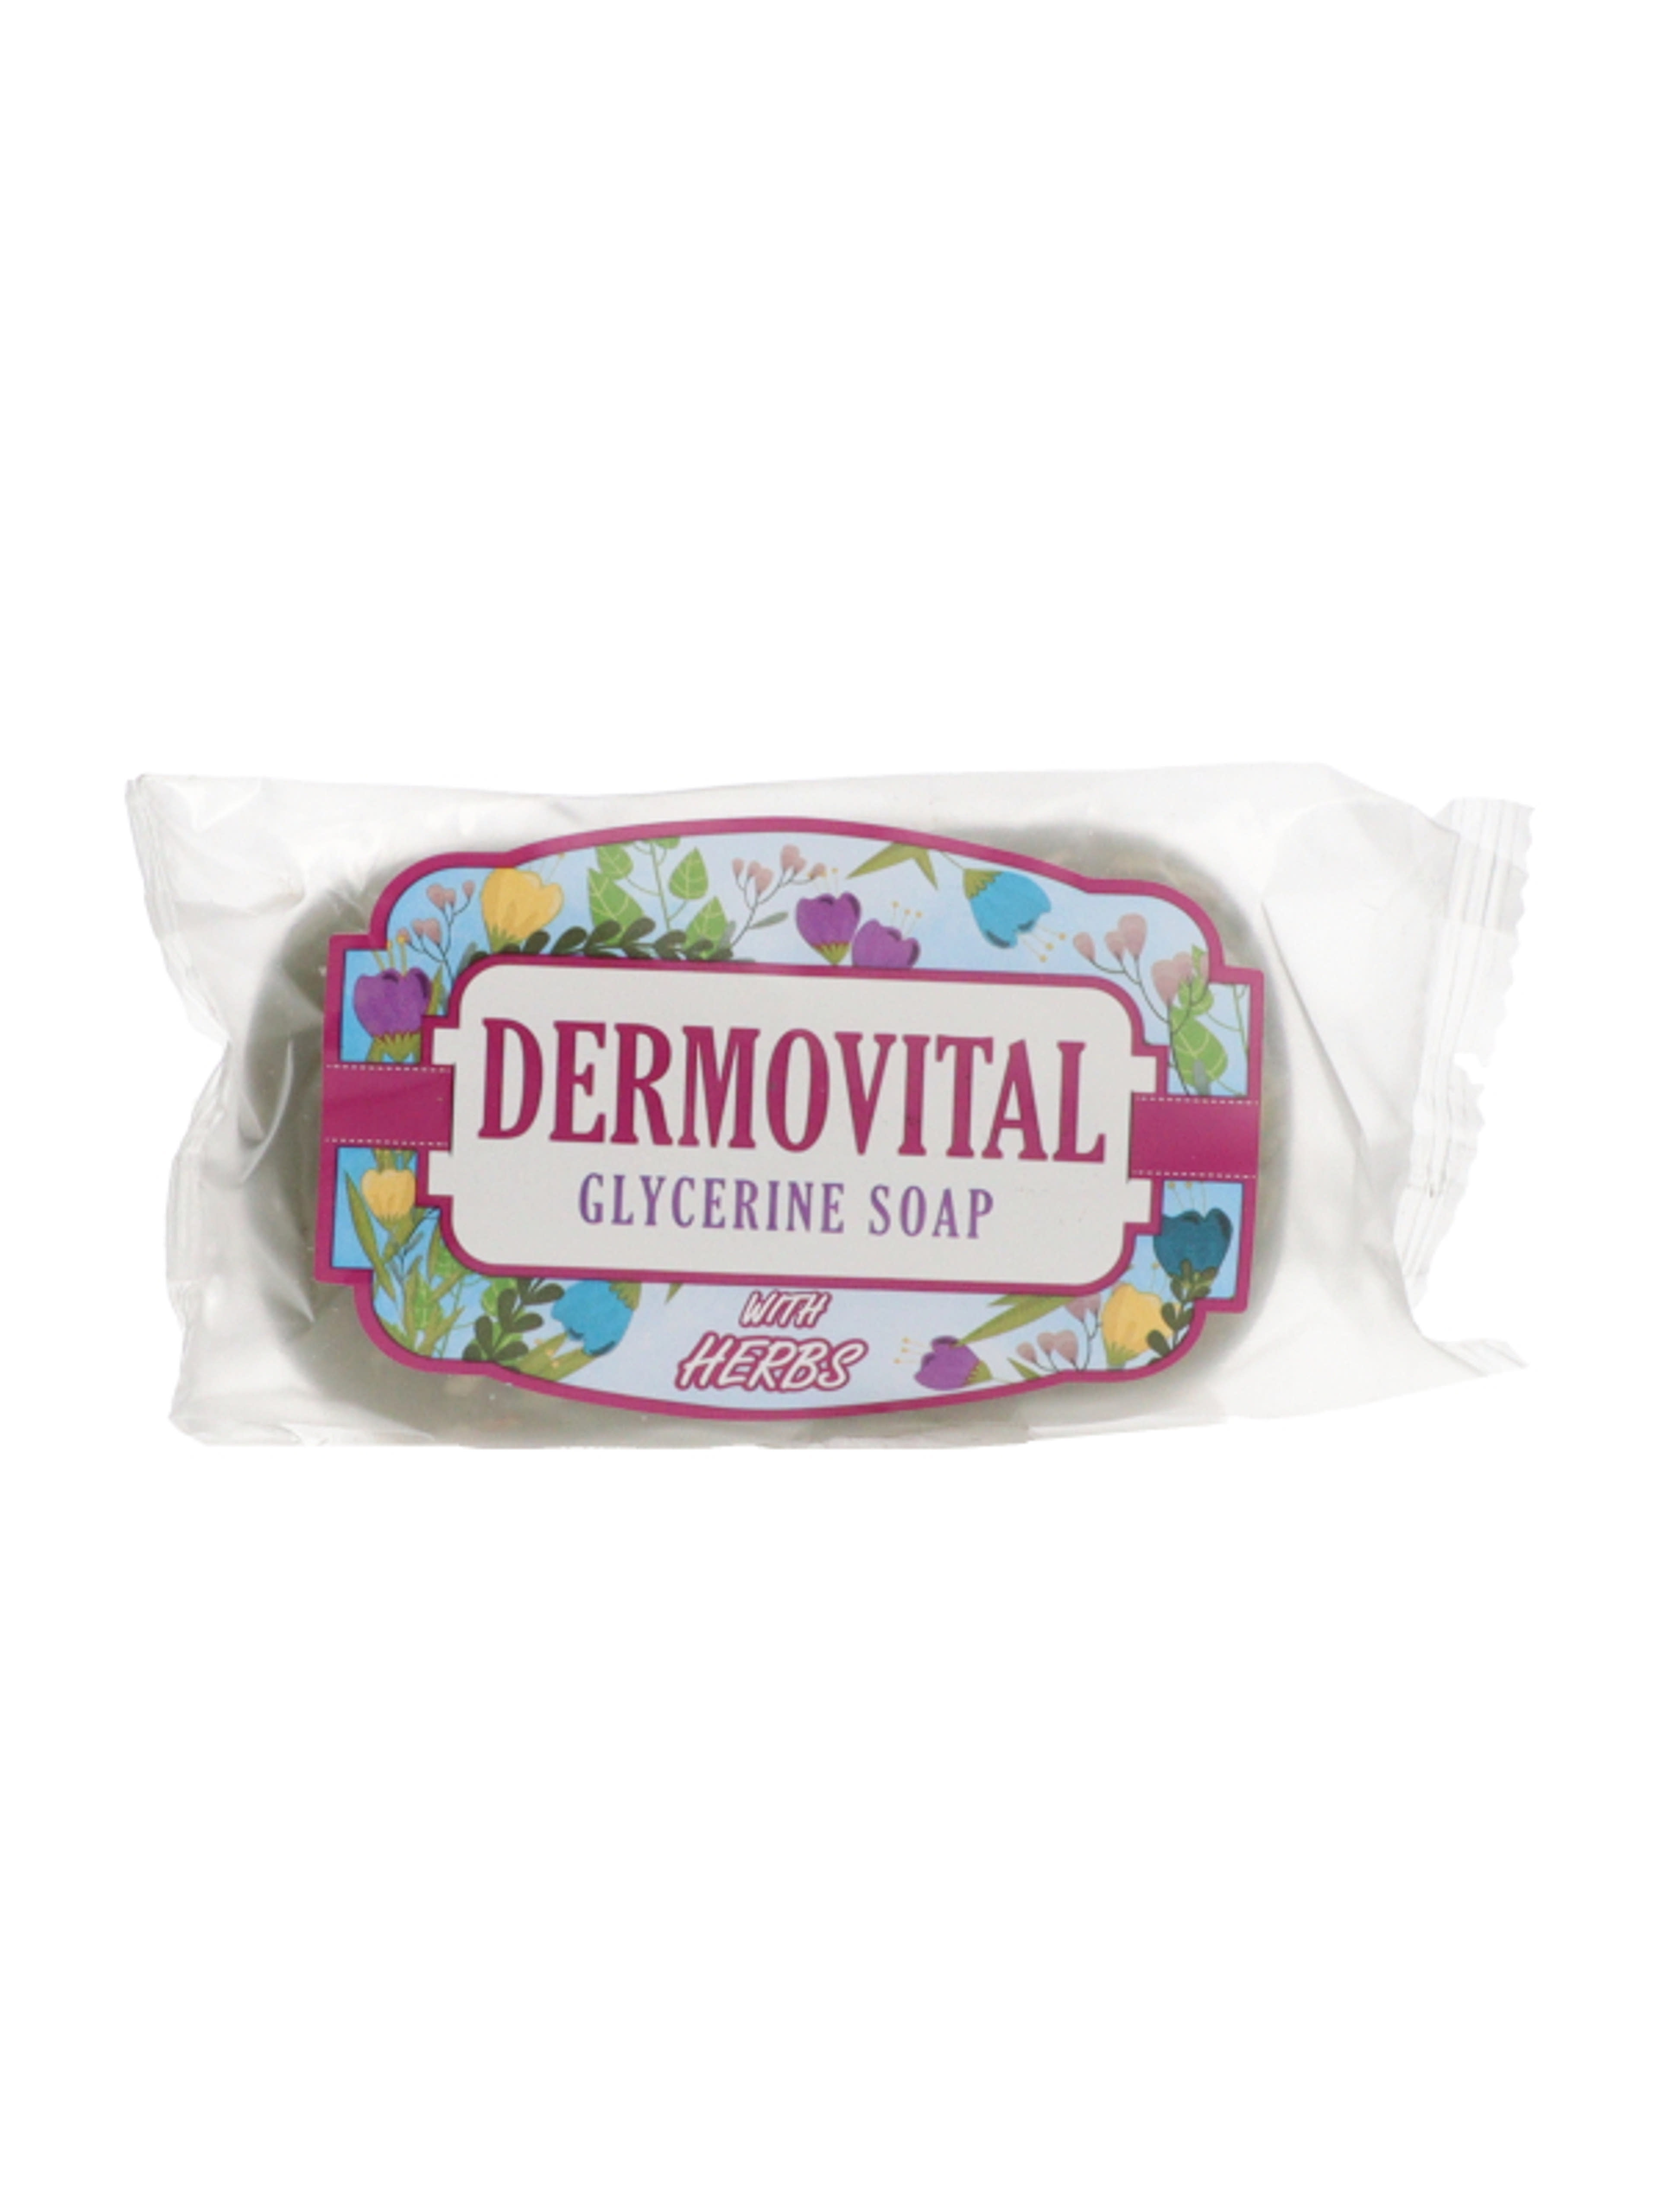 Dermovital Herbs glicerines szappan - 100 g